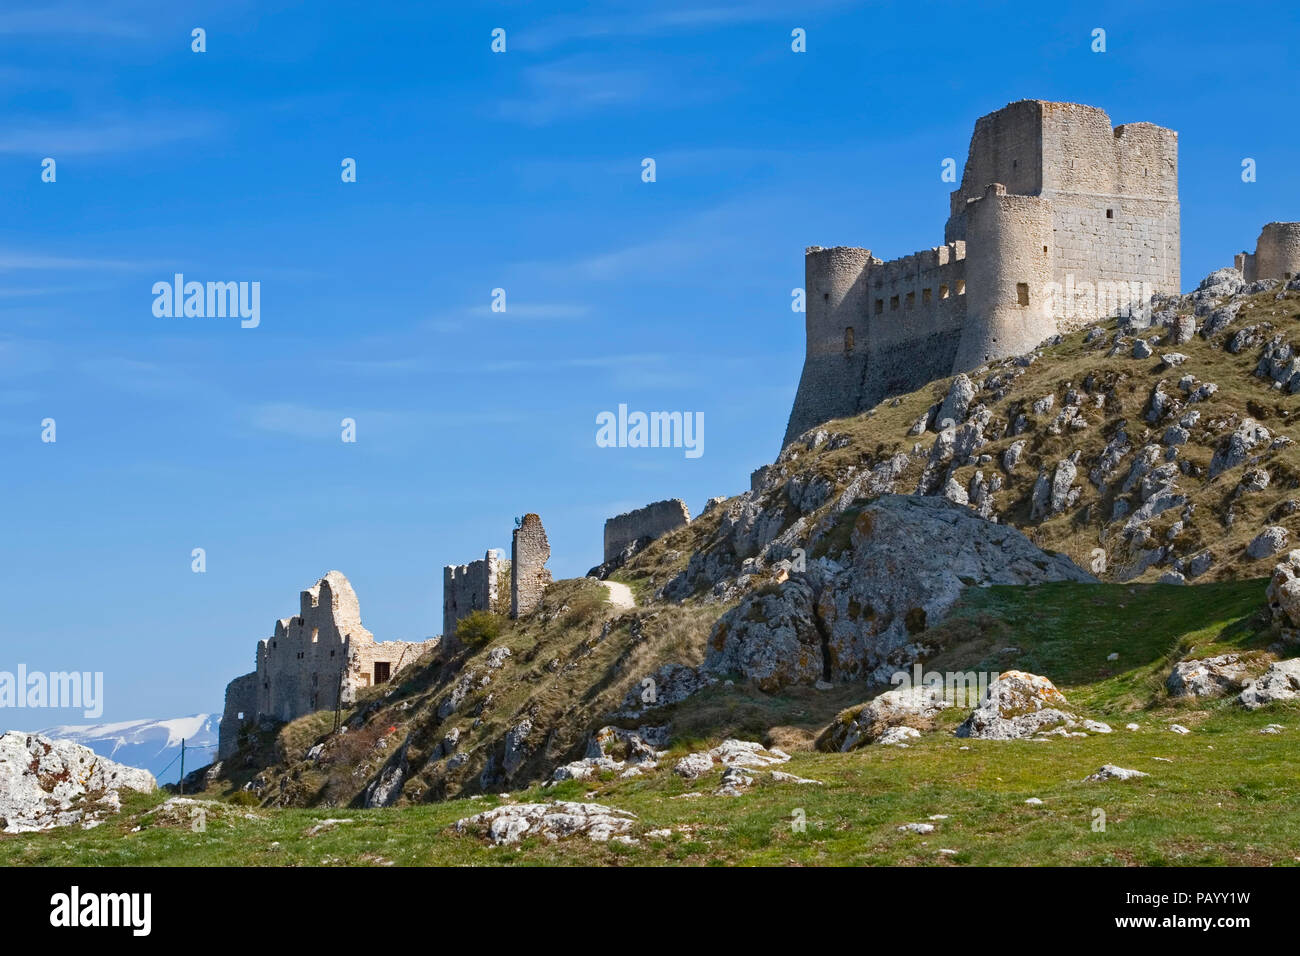 A Castle in the sky - The Lady Howke Castle, Rocca Calascio - Aquila - Italy Stock Photo